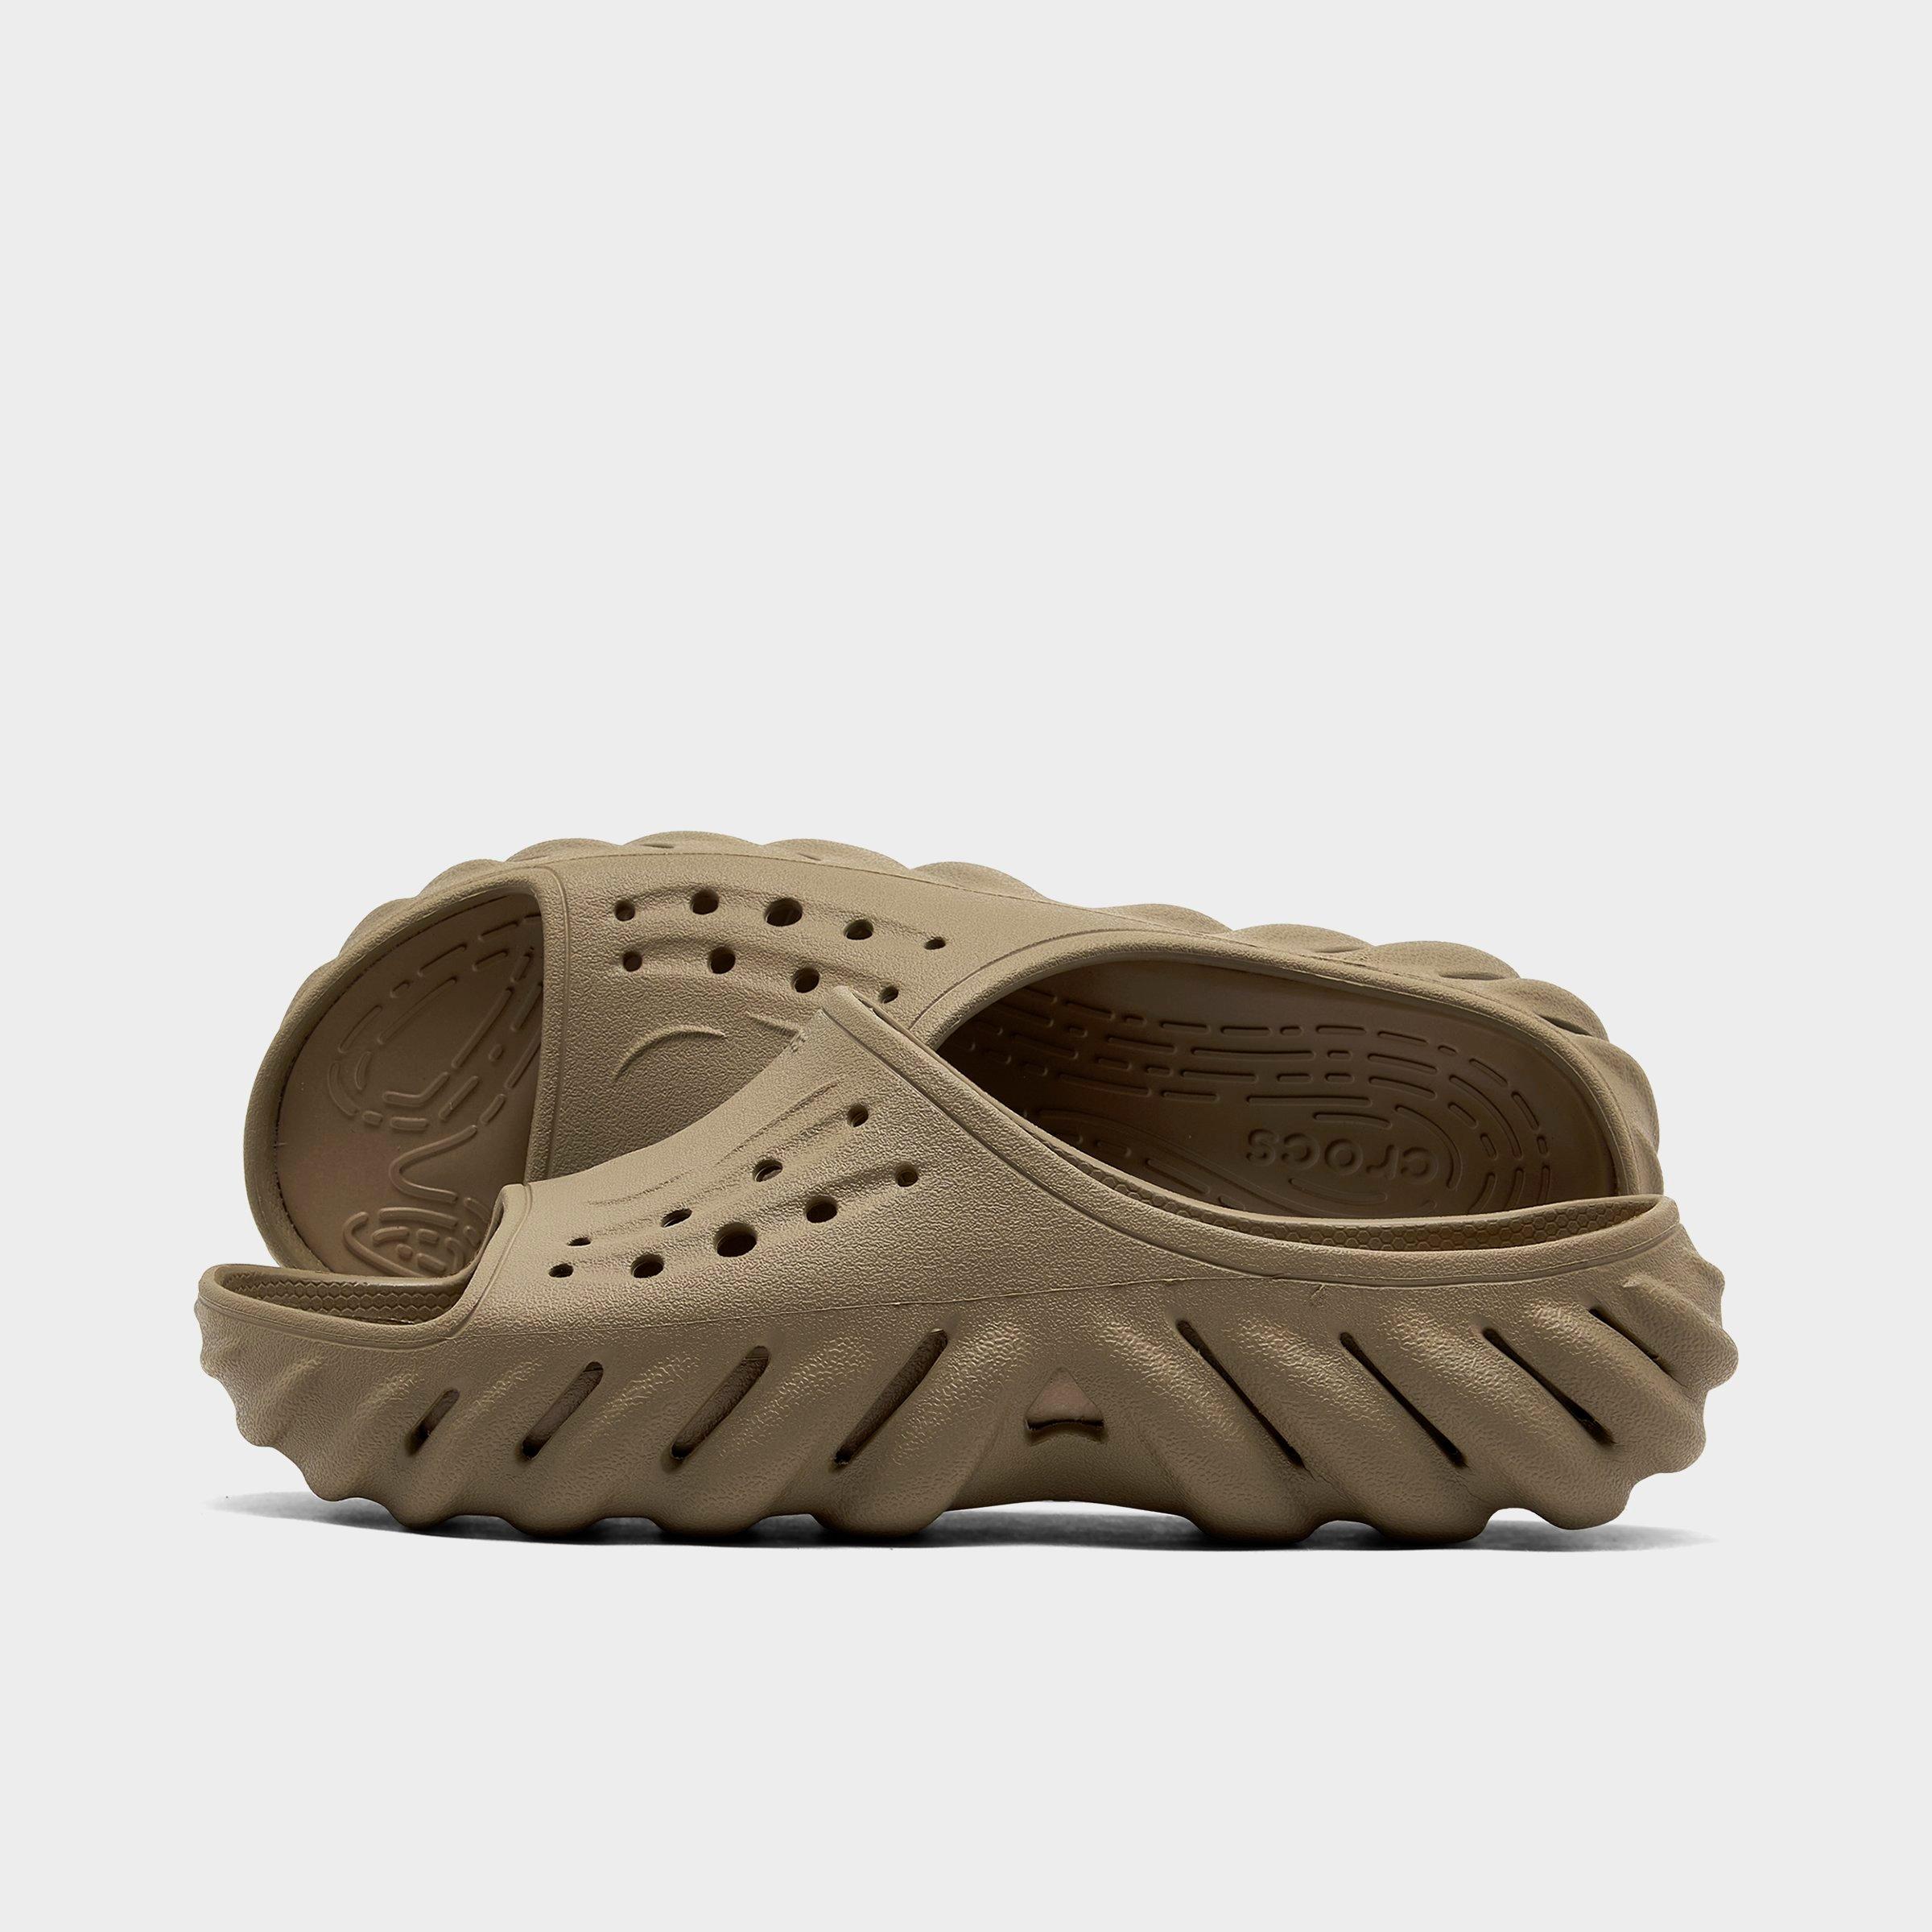 Crocs Echo Slide Sandals Size 14.0 In Tumbleweed